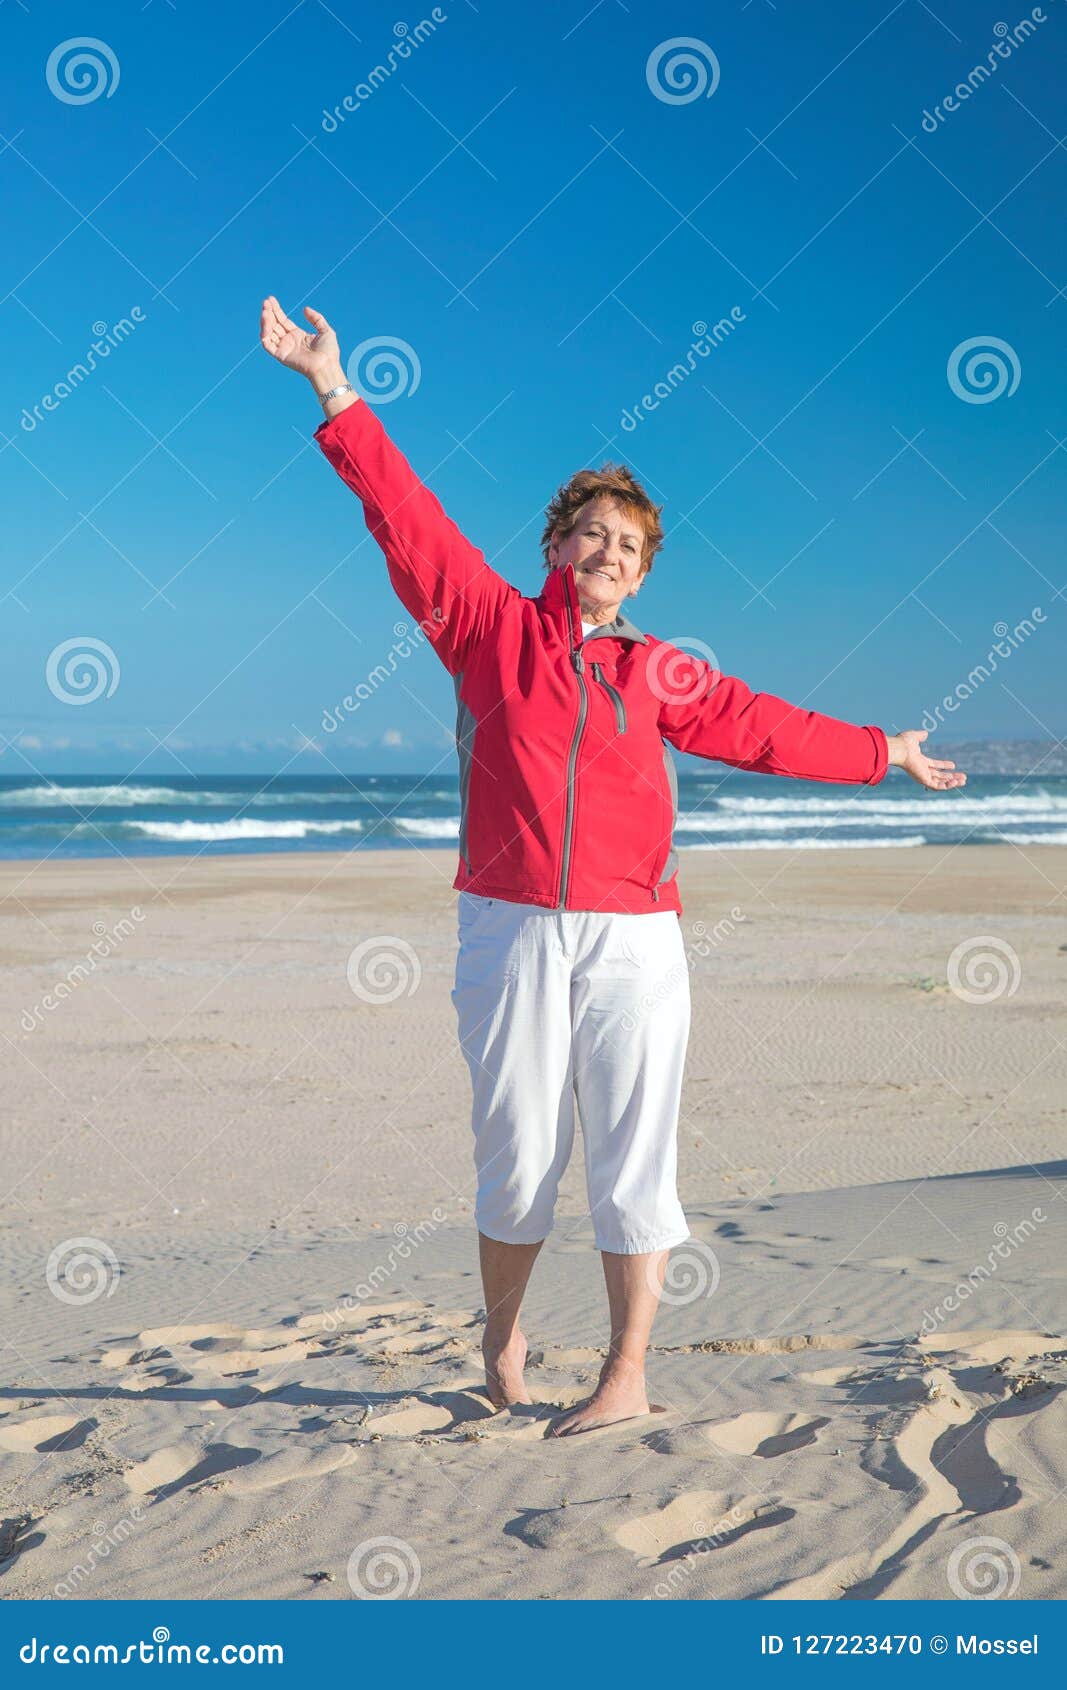 Beach granny on Couple have